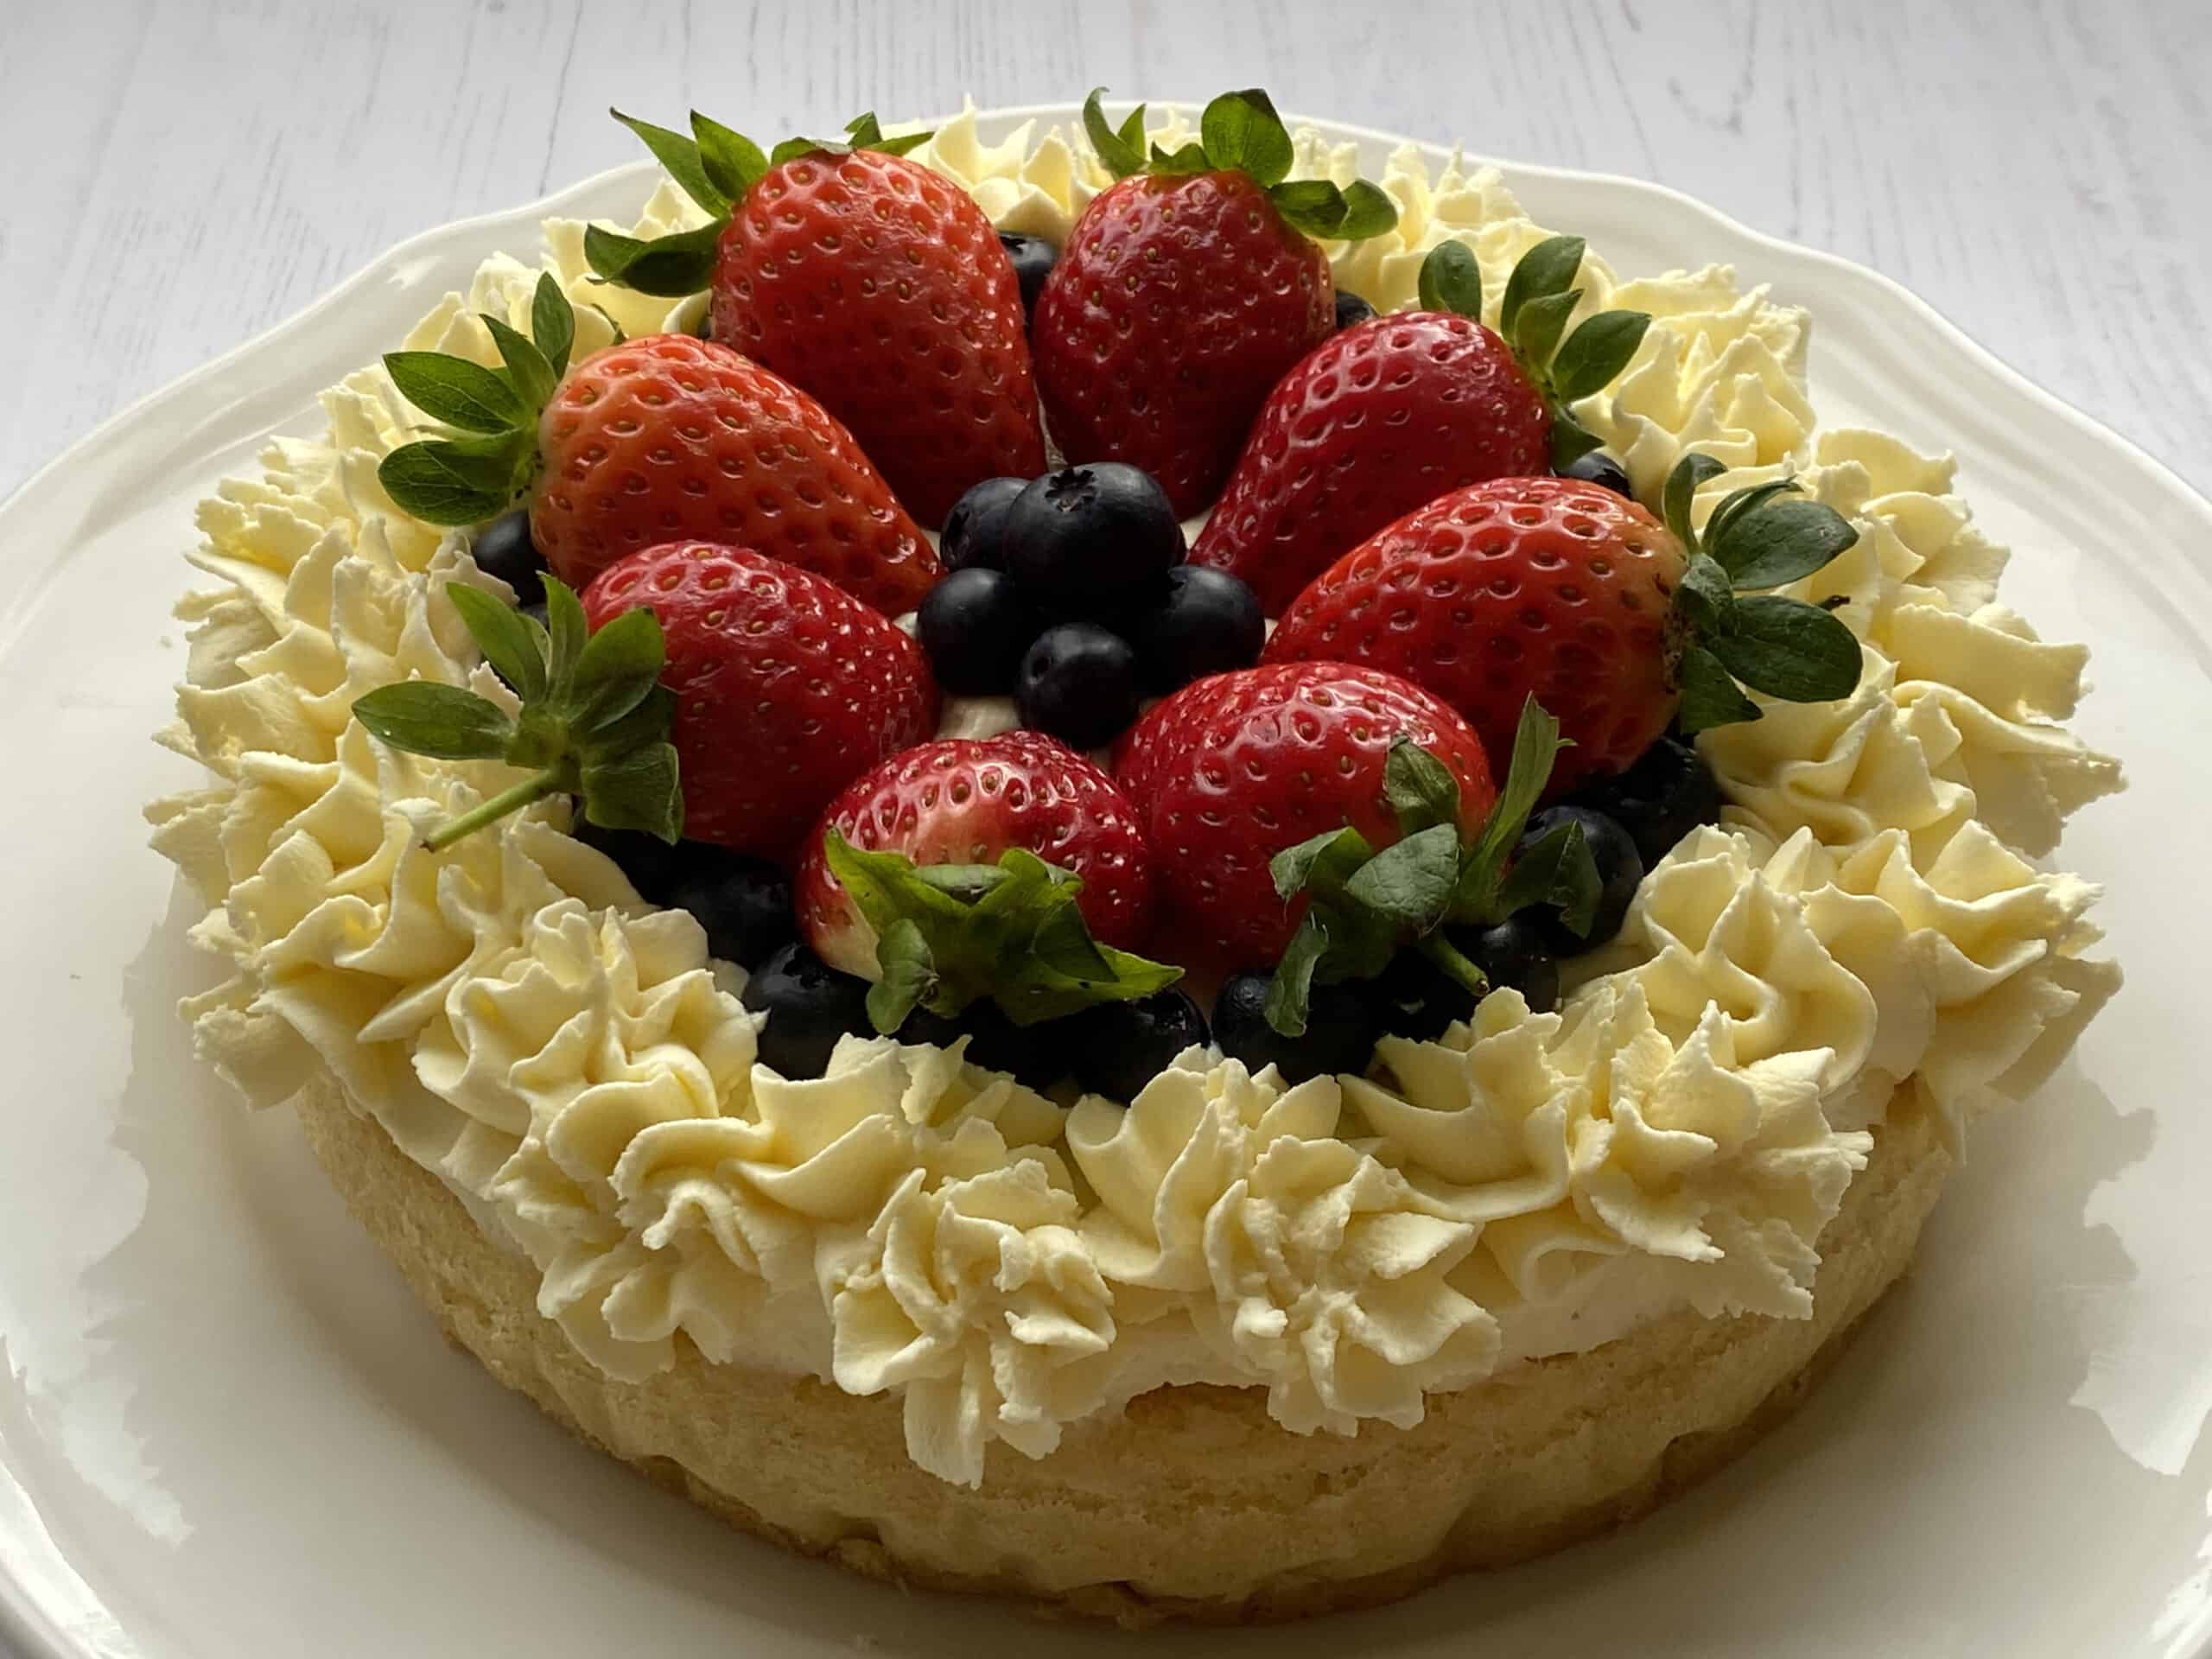 simulation cake model bakehouse shop store decoration cherry strawberry  blueberry kiwi fruit cream cake artificial food props - AliExpress